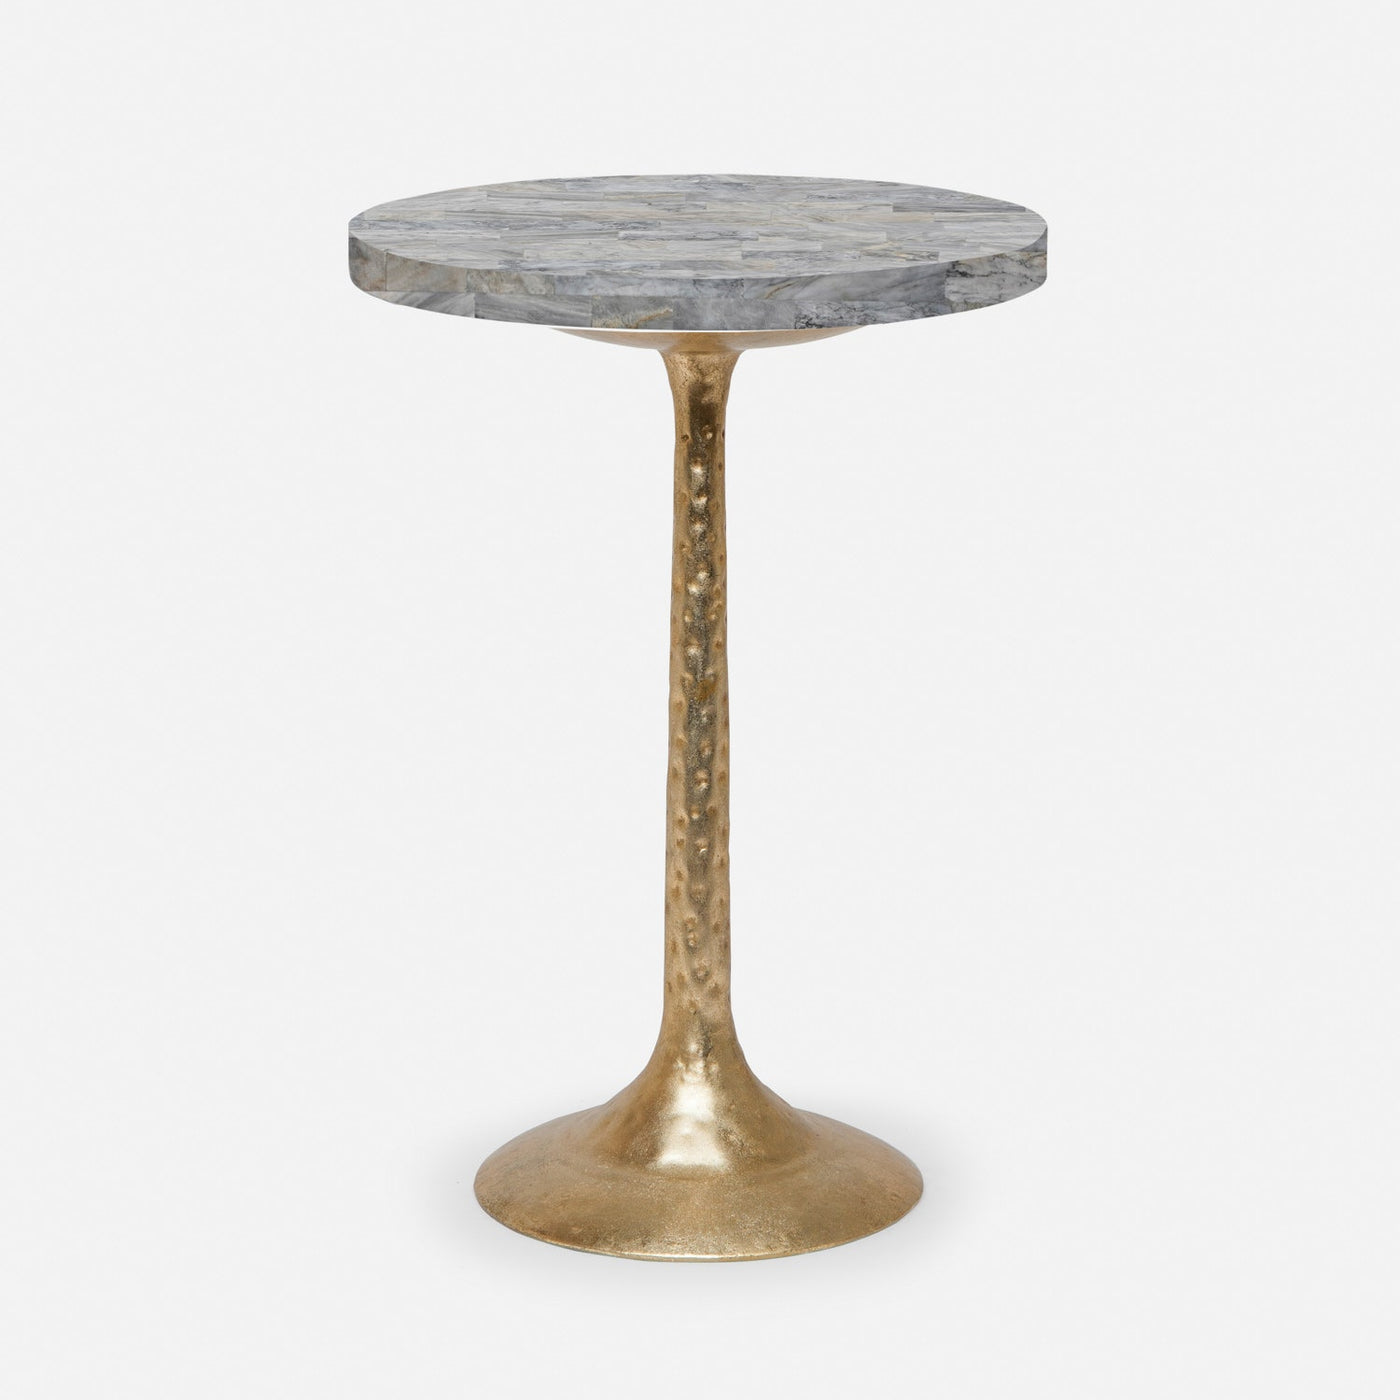 TABLE ROUND SHINY GOLD BASE GRAY ROMBLON STONE